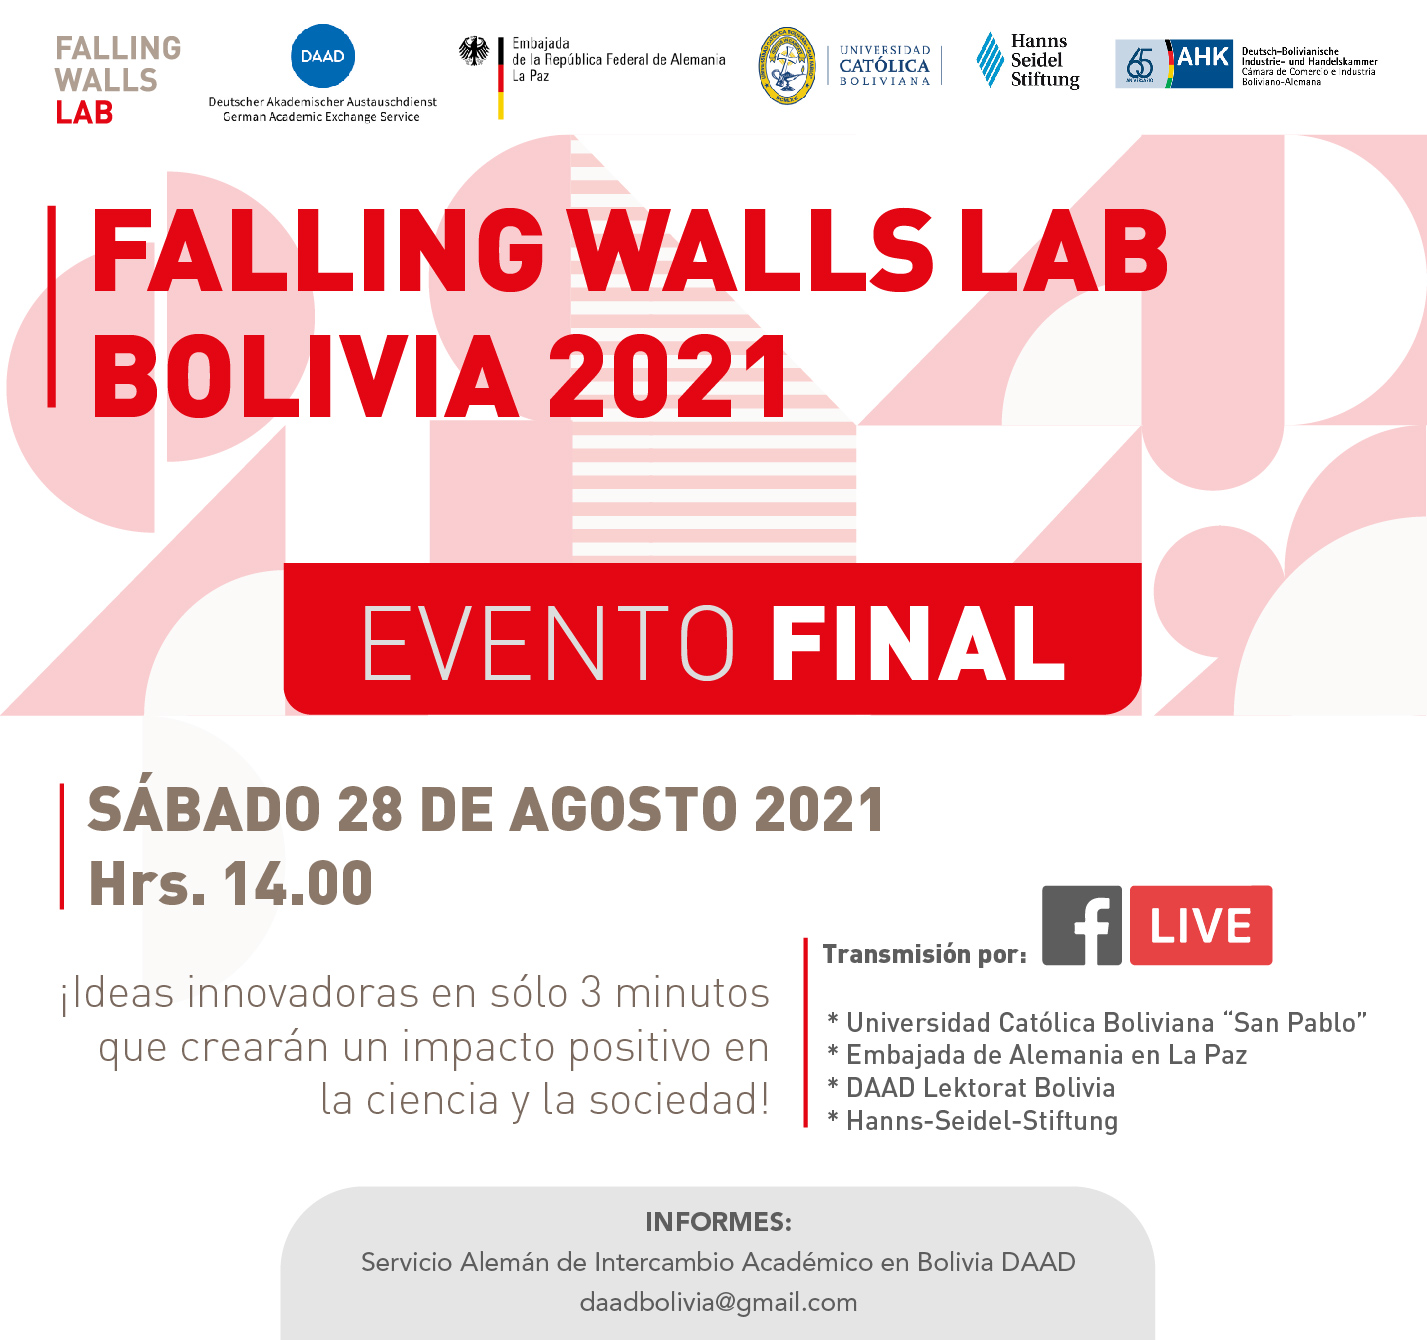 Gran Final del Falling Walls hoy sábado 28 de agosto a horas 14:00